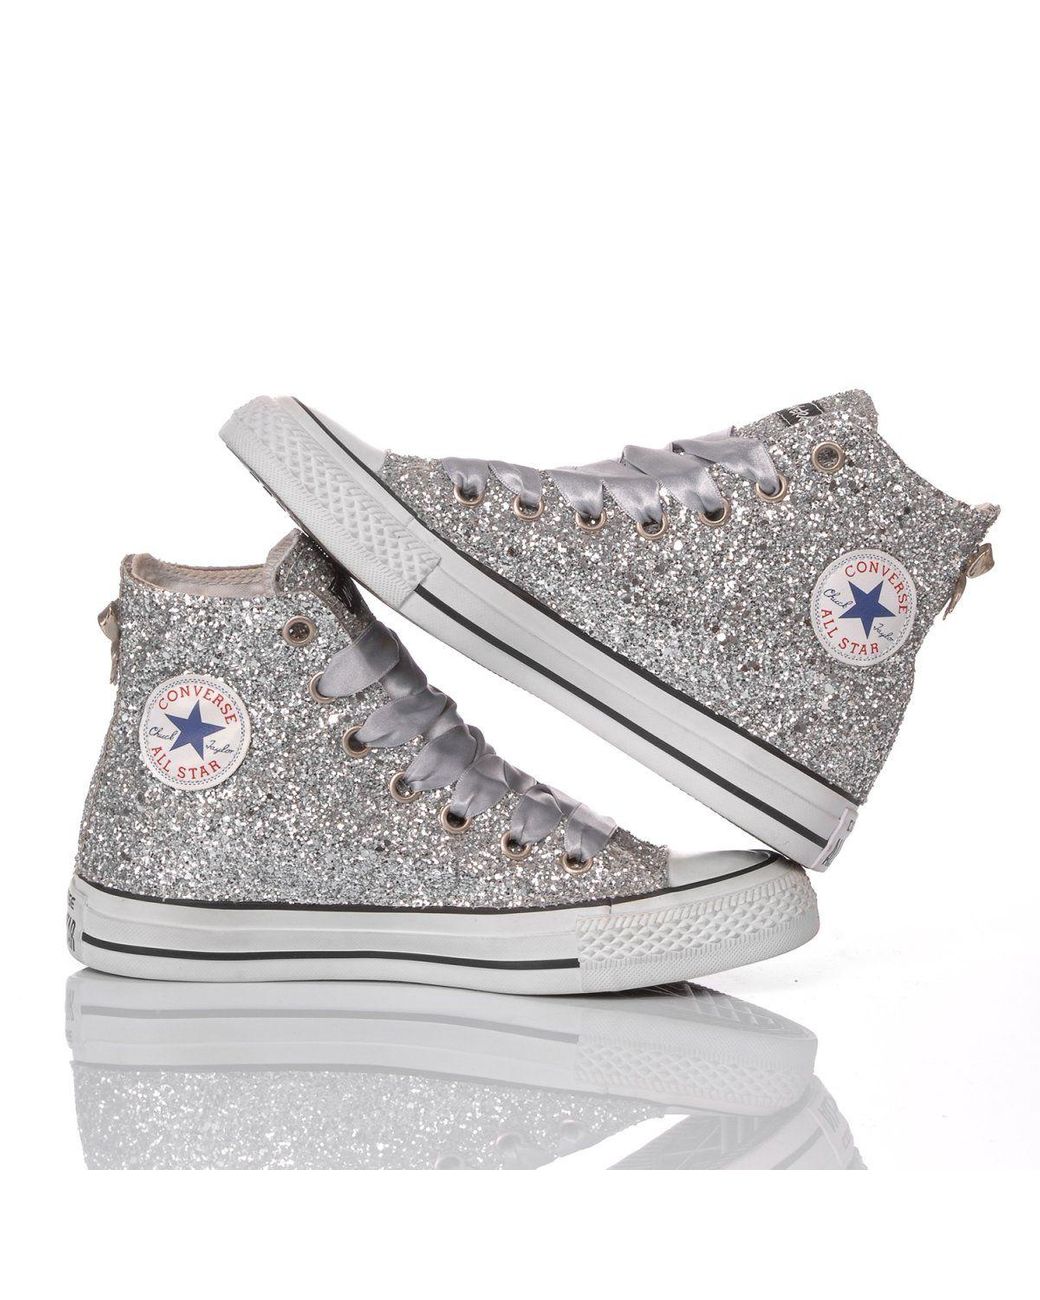 Converse Glitter Hi Top Sneakers in Silver (Metallic) - Save 34 ... ساعة ابل نايك